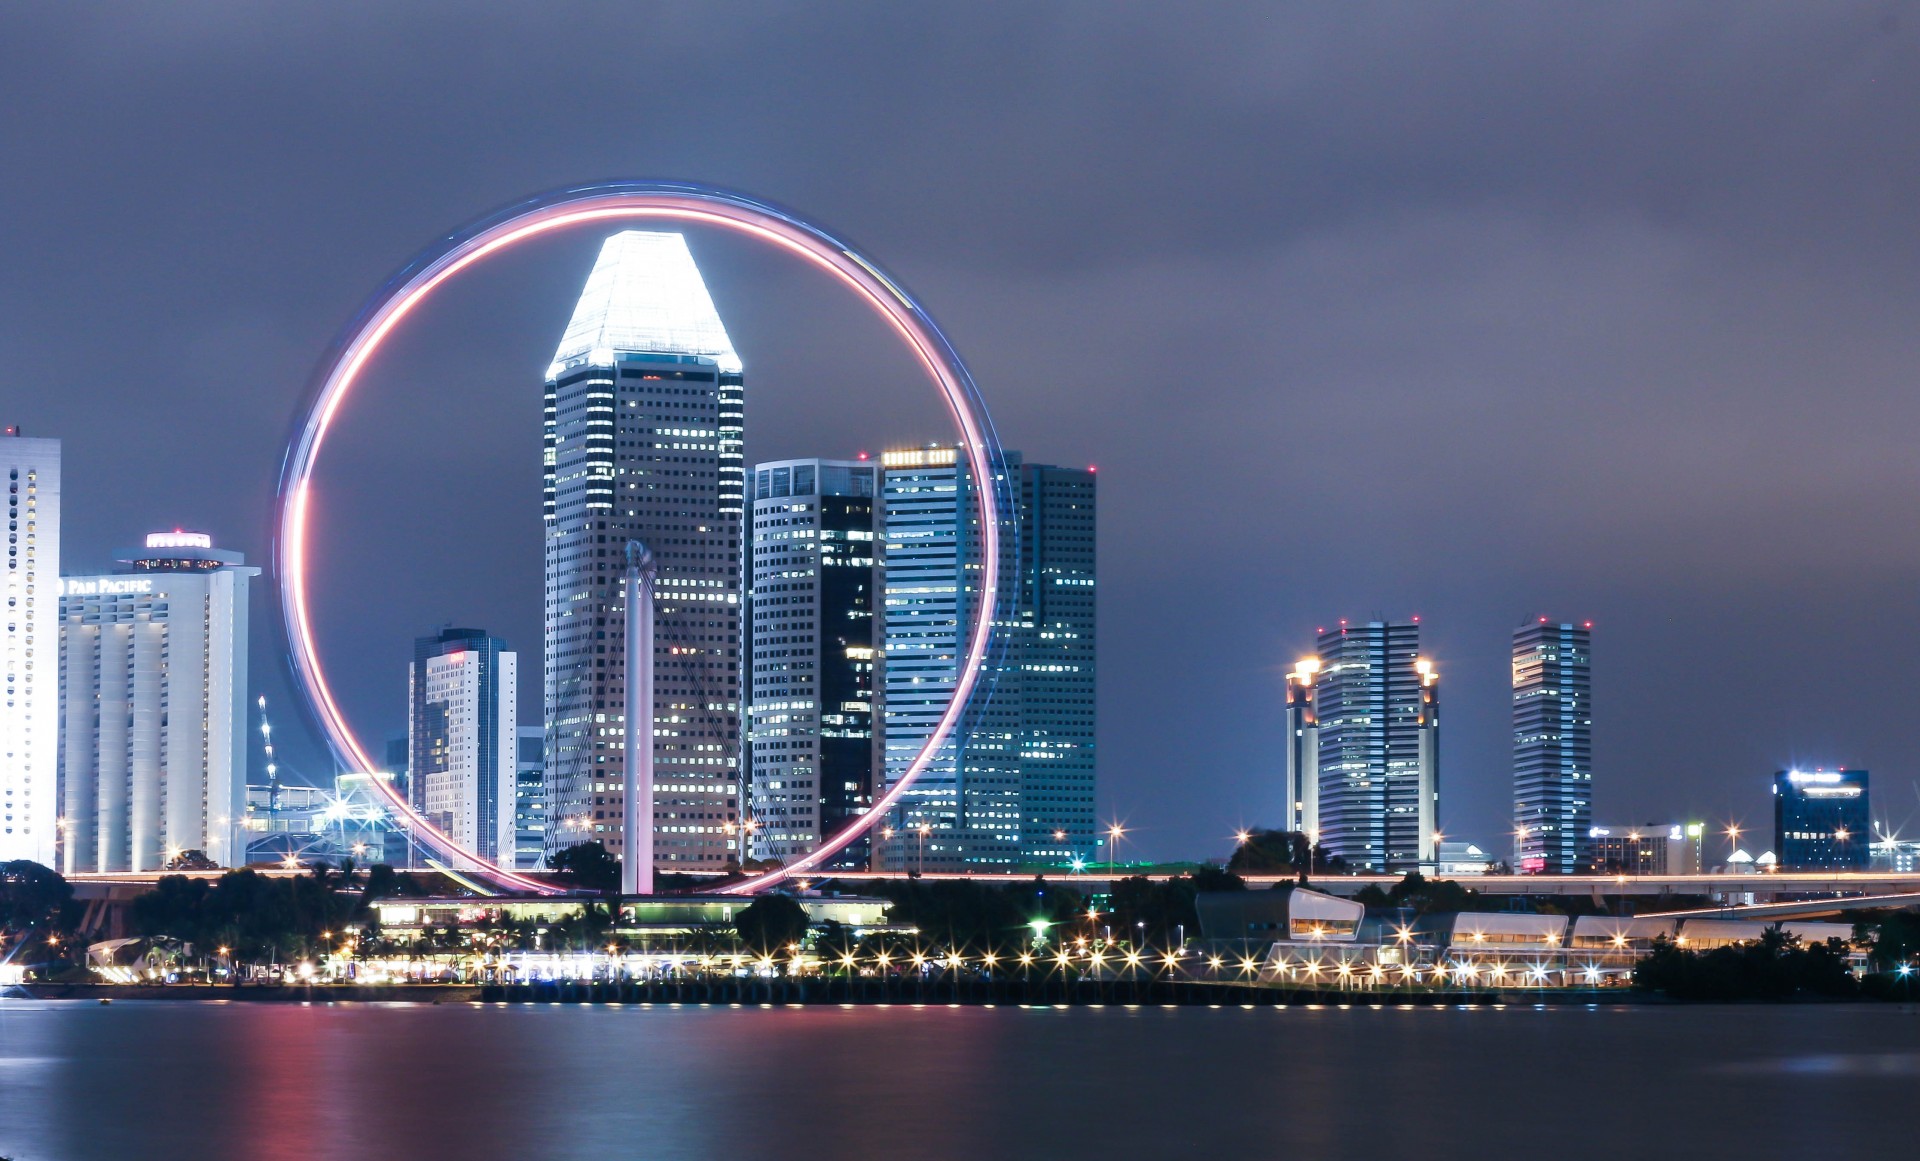 singapore flyer ferris wheel scenery free photo